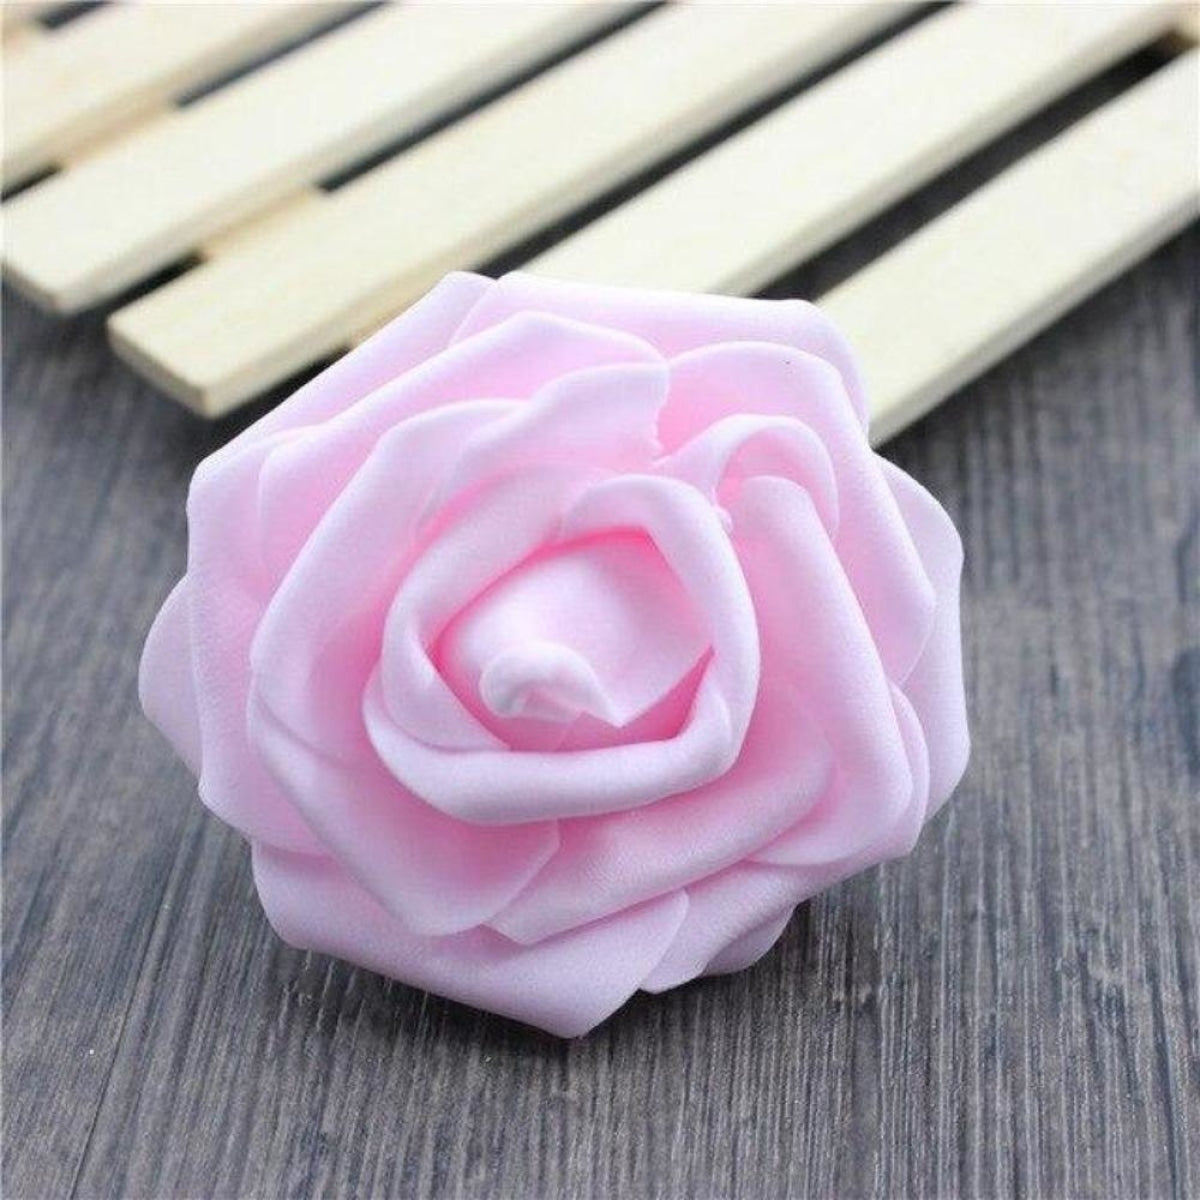 7.5Cm Artificial Fake Flowers Foam Rose Head For Wedding Decorations Diy Wreaths 40Pcs Light Pink